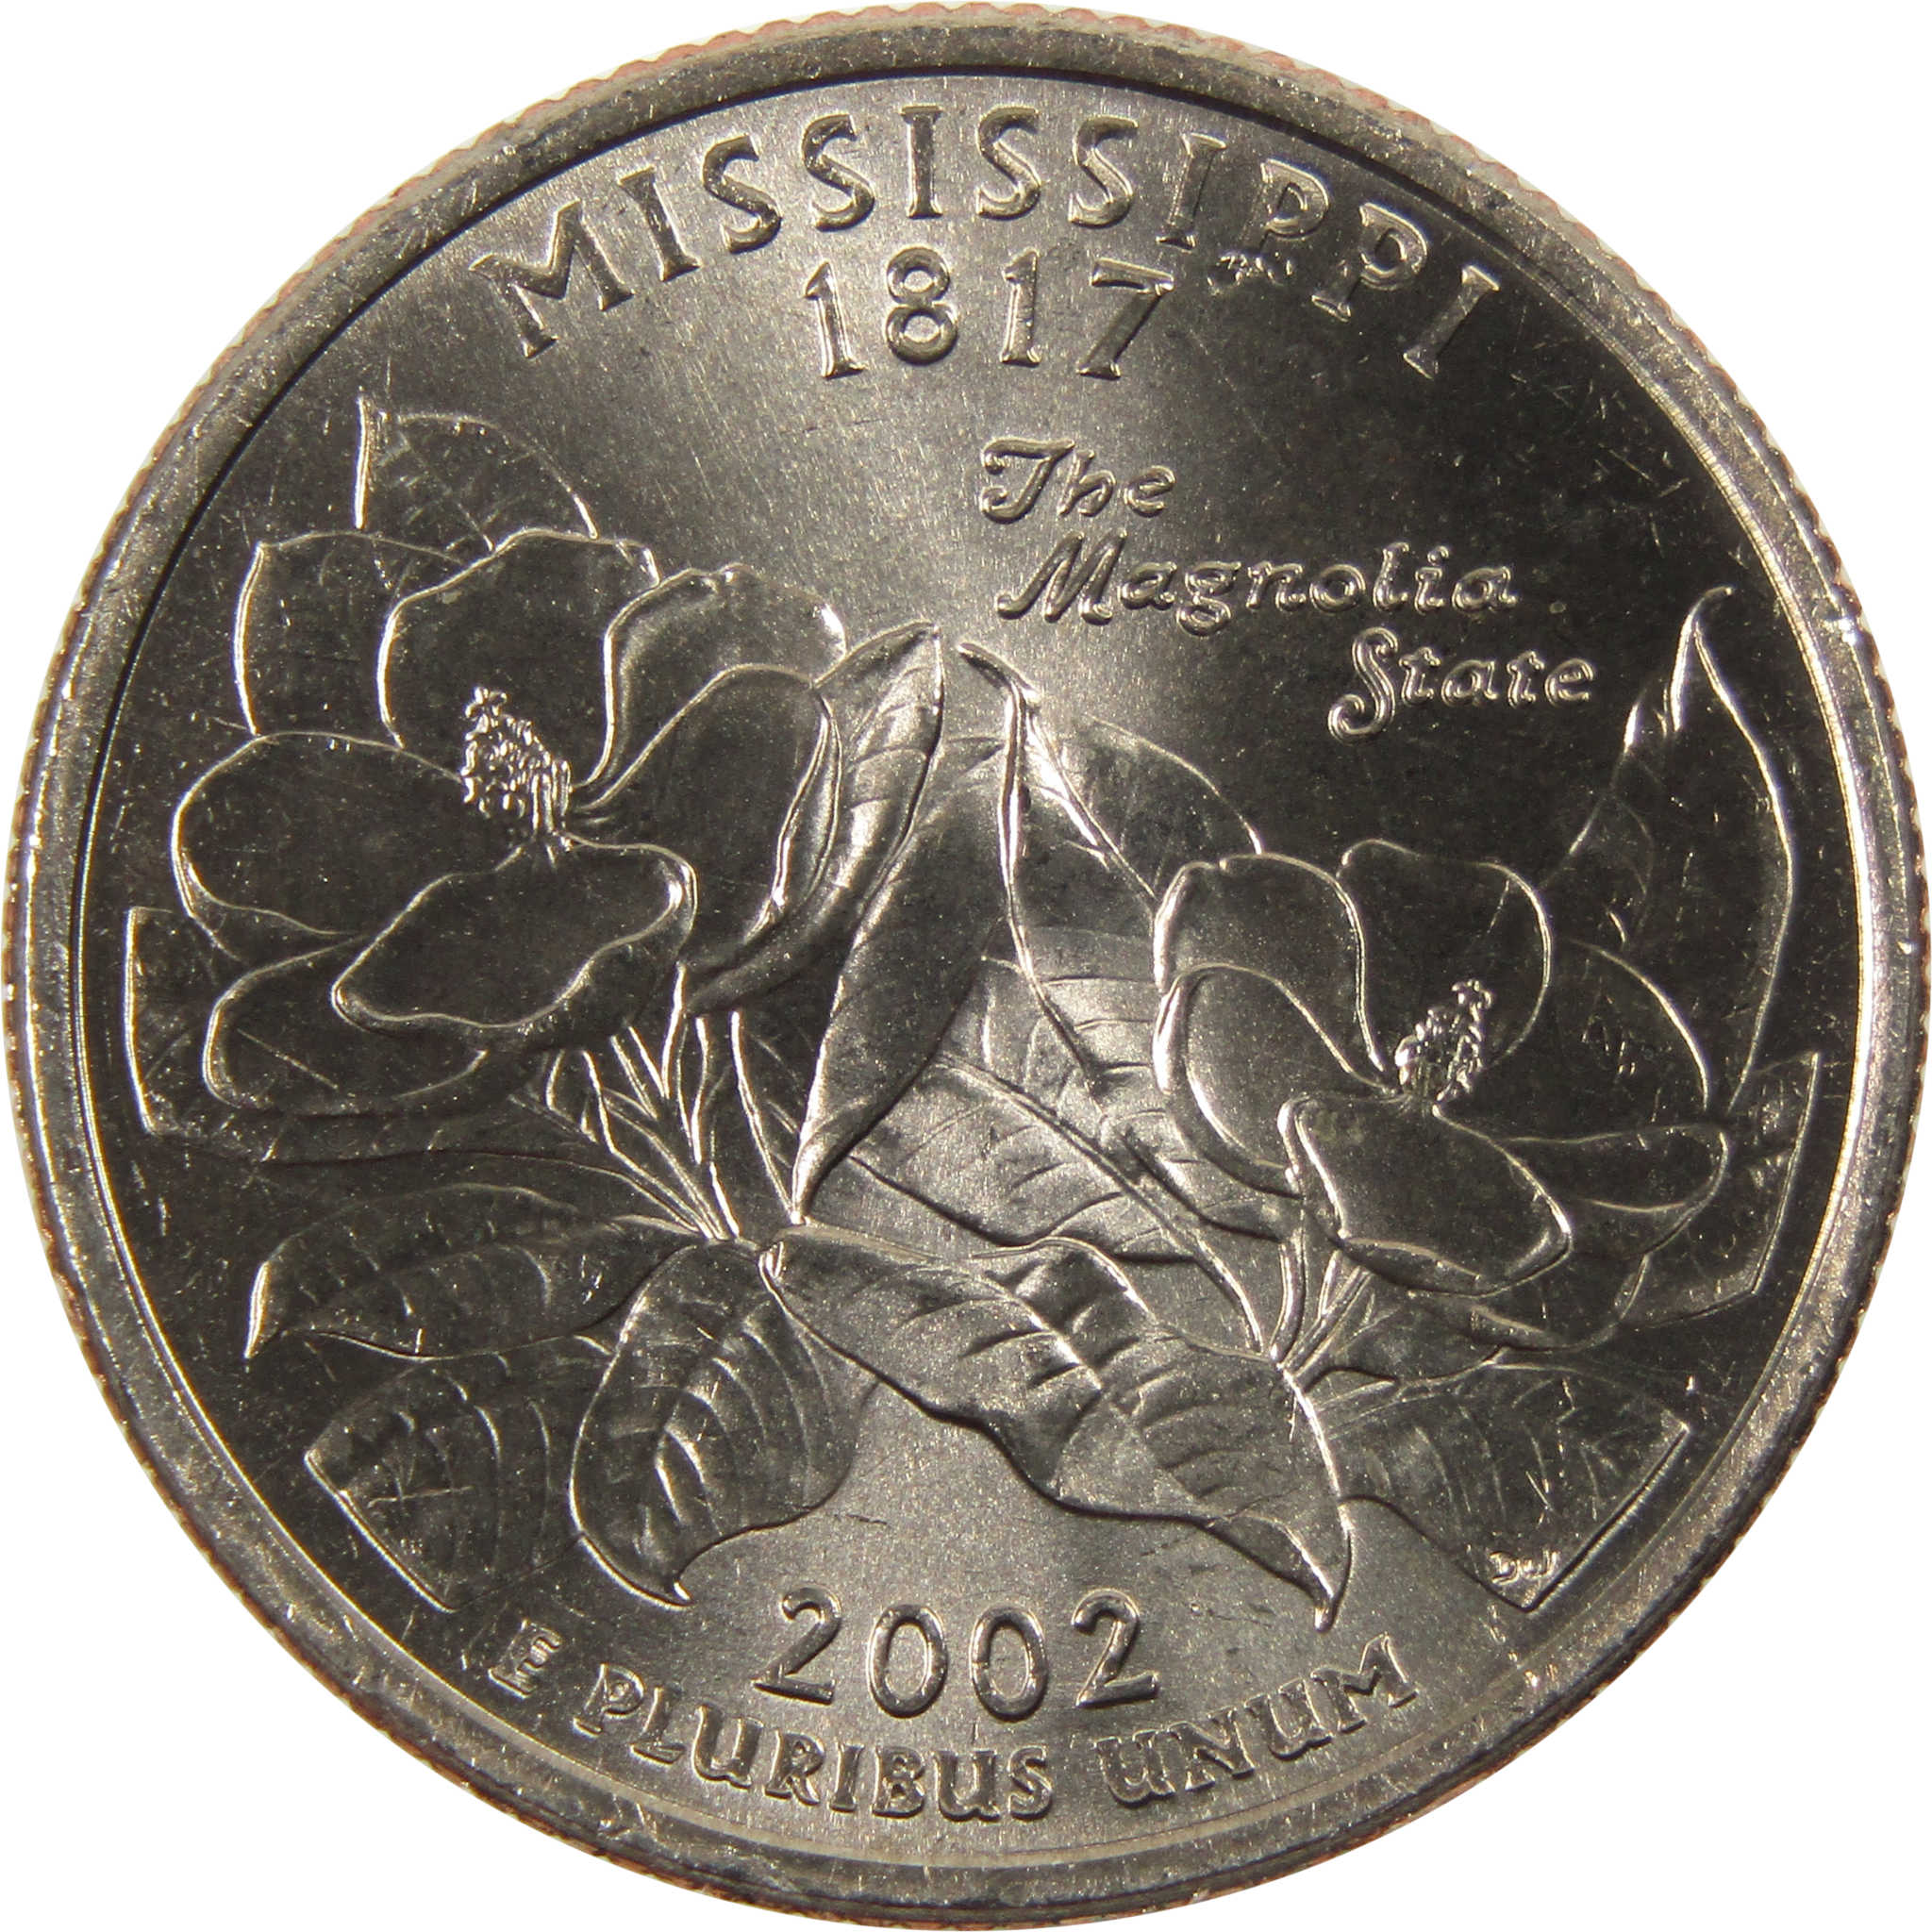 2002 P Mississippi State Quarter BU Uncirculated Clad 25c Coin